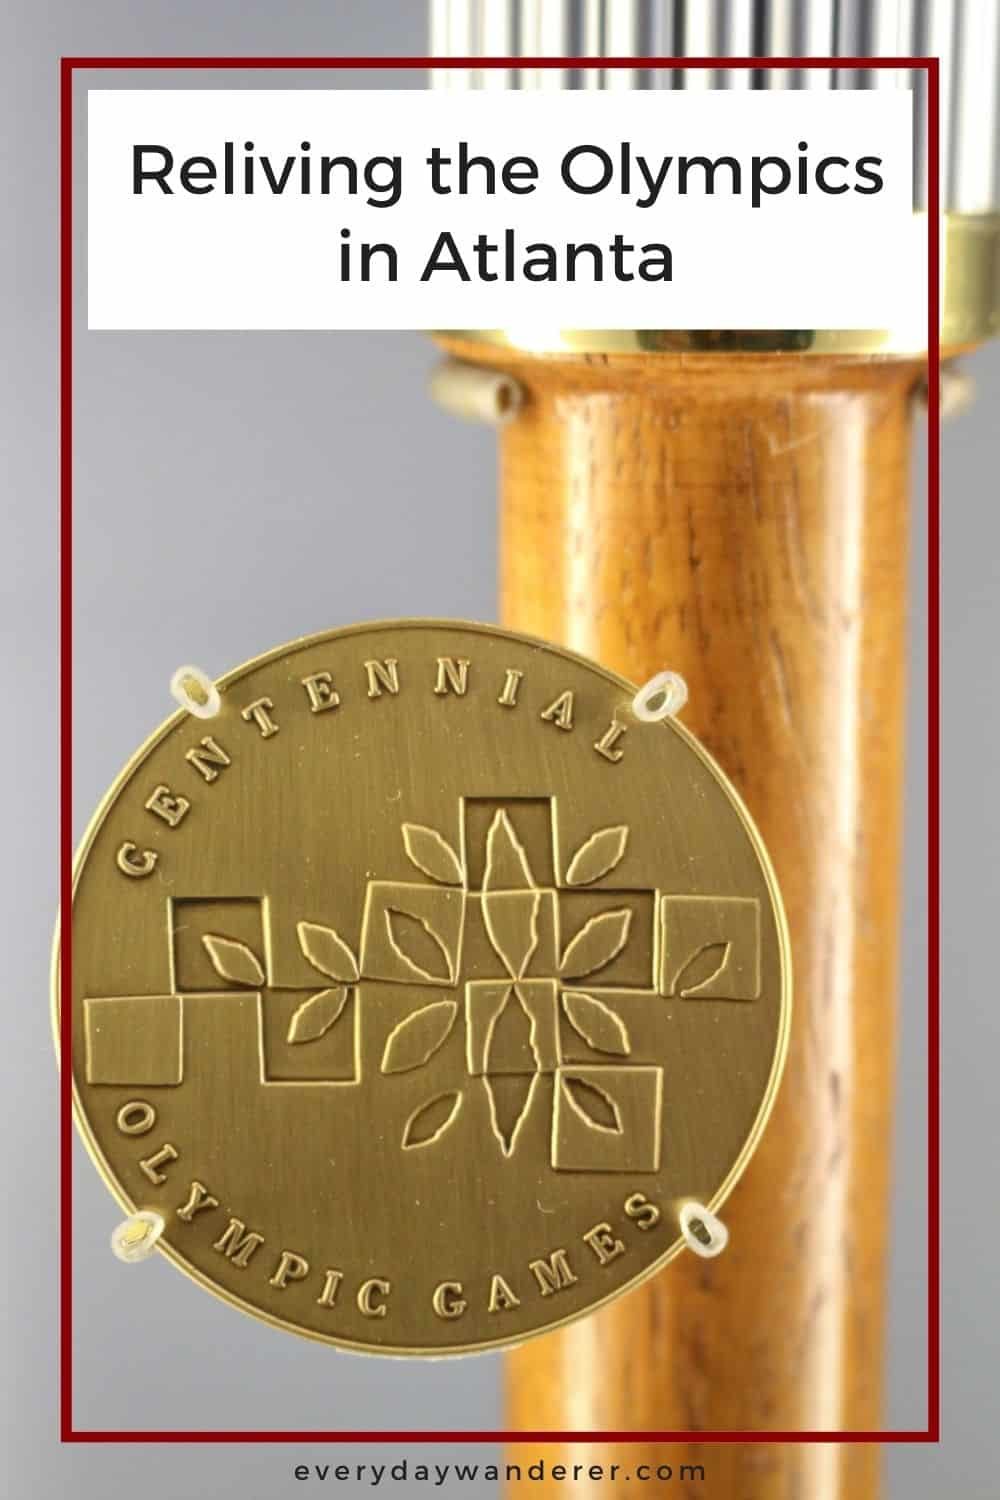 Atlanta Olympic Sites - Pin 2 - JPG